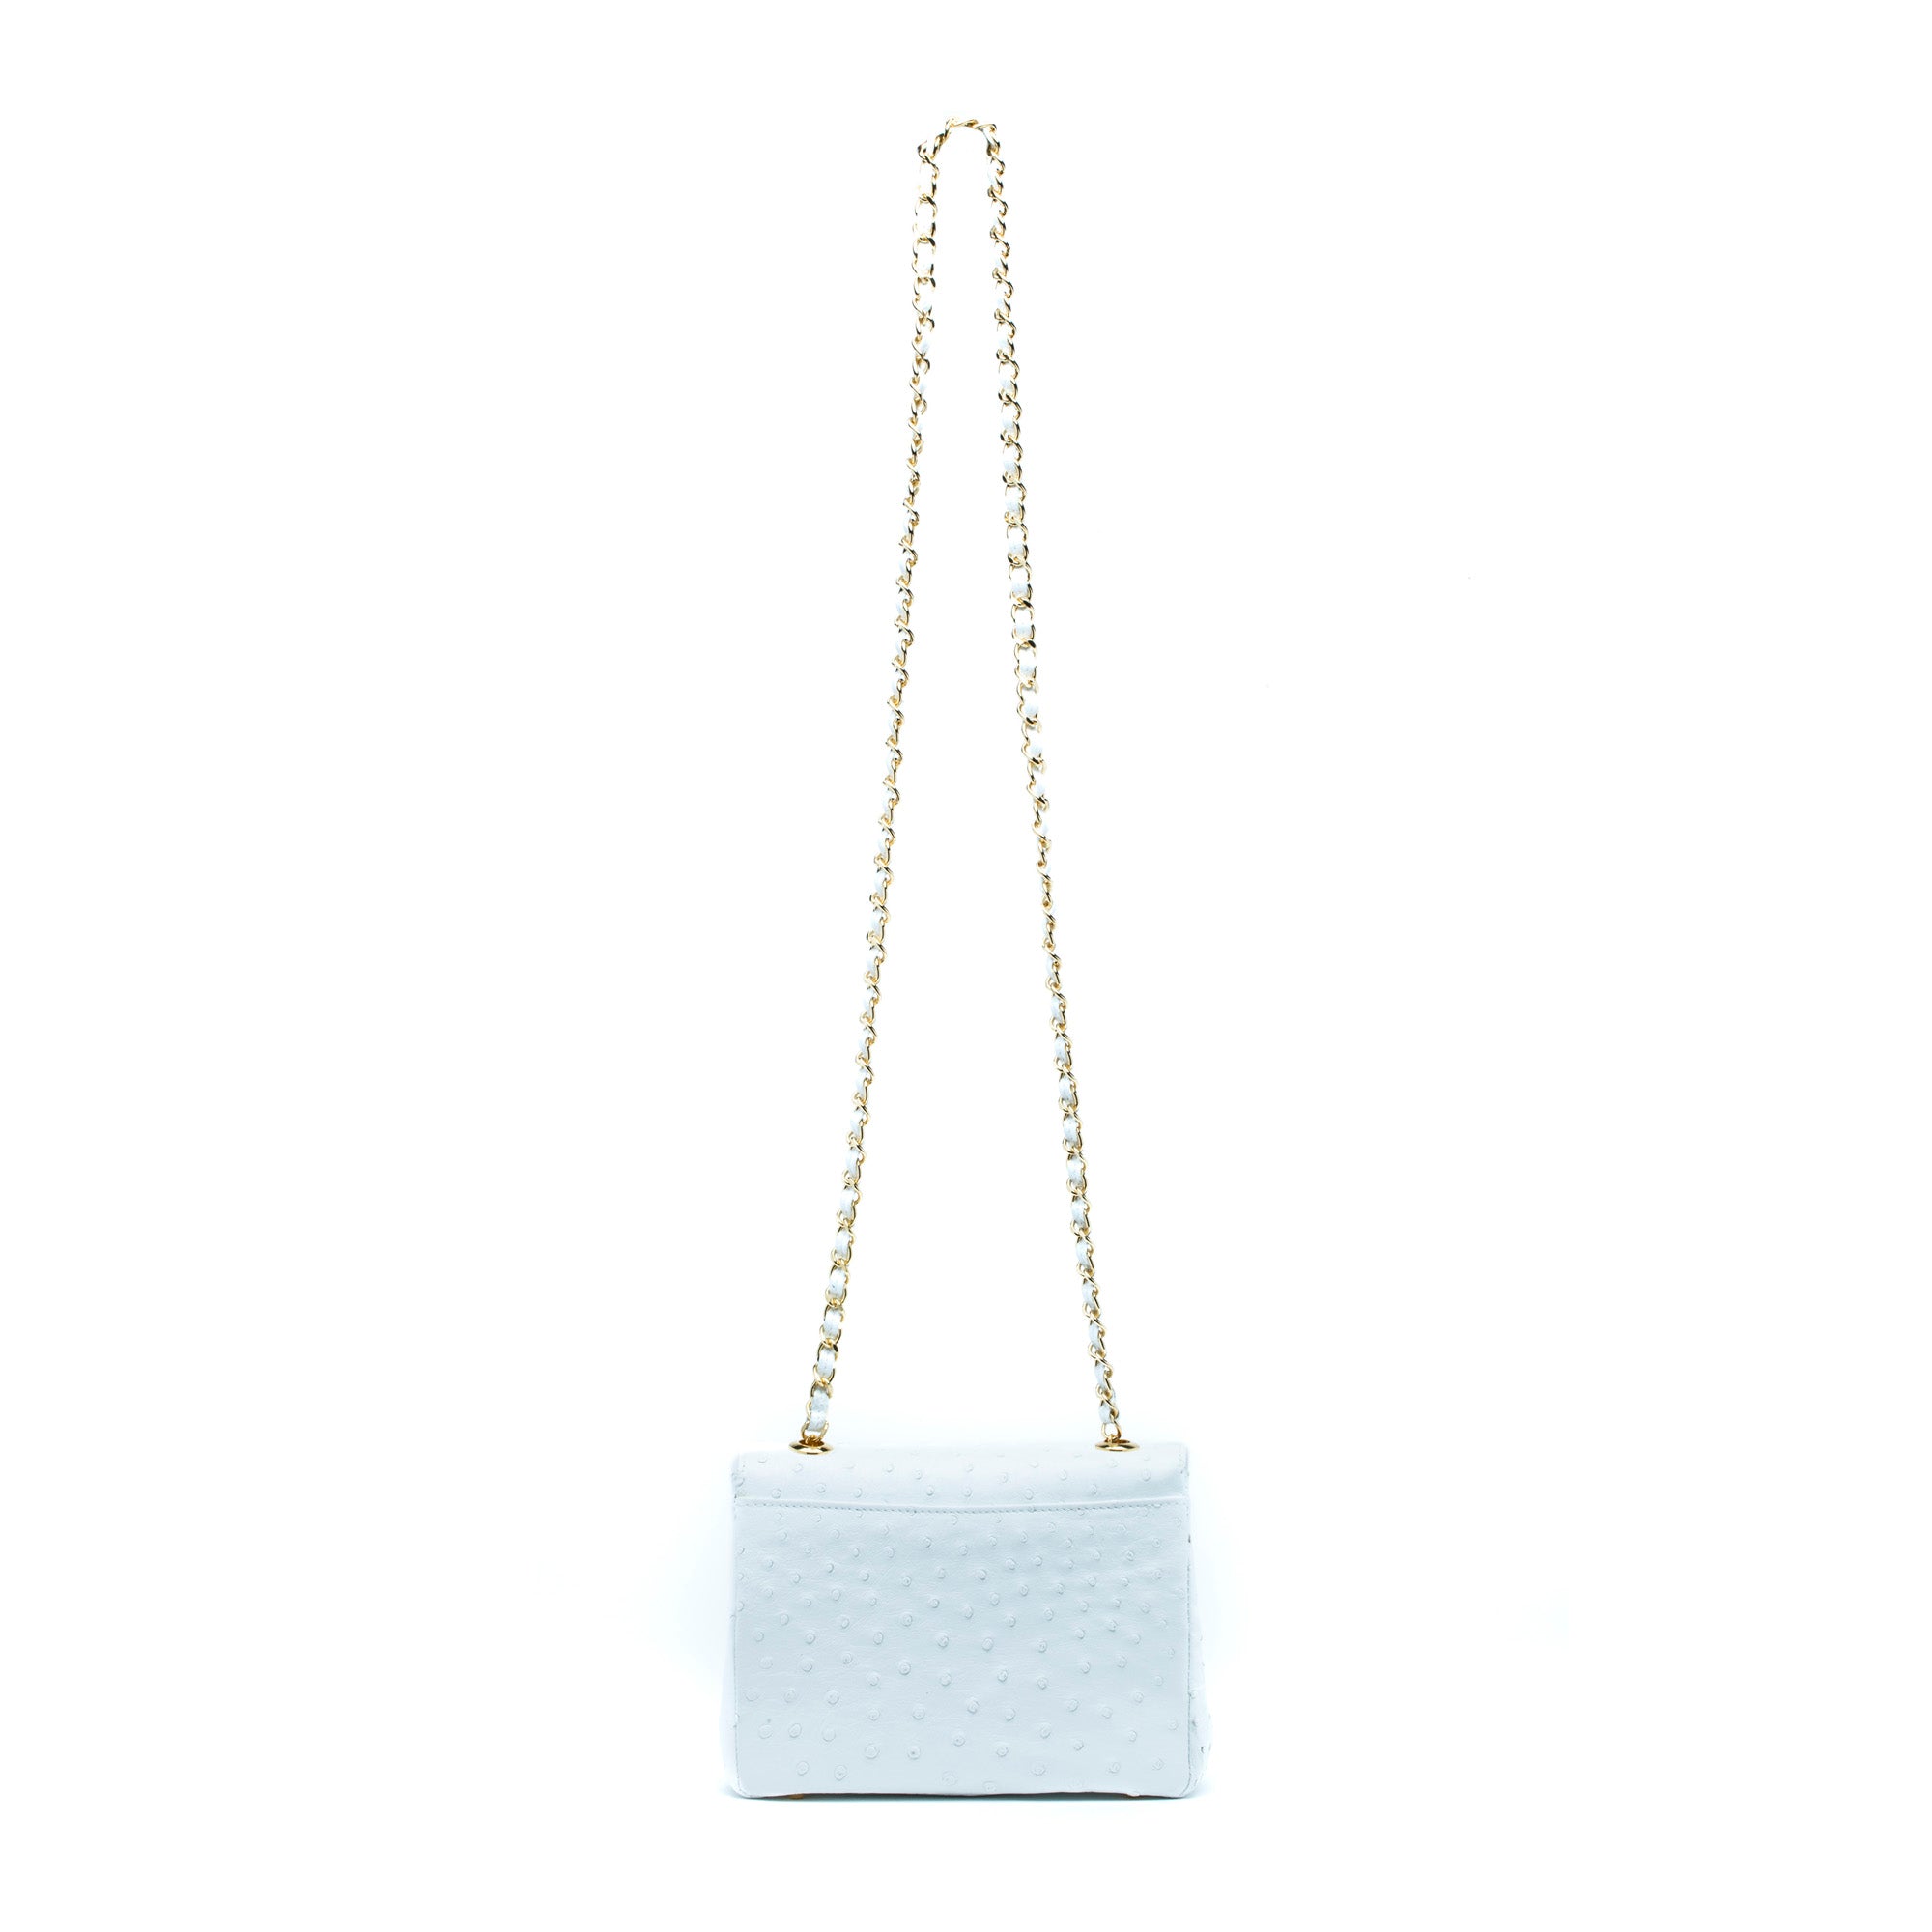 Medium Chain Bag in White